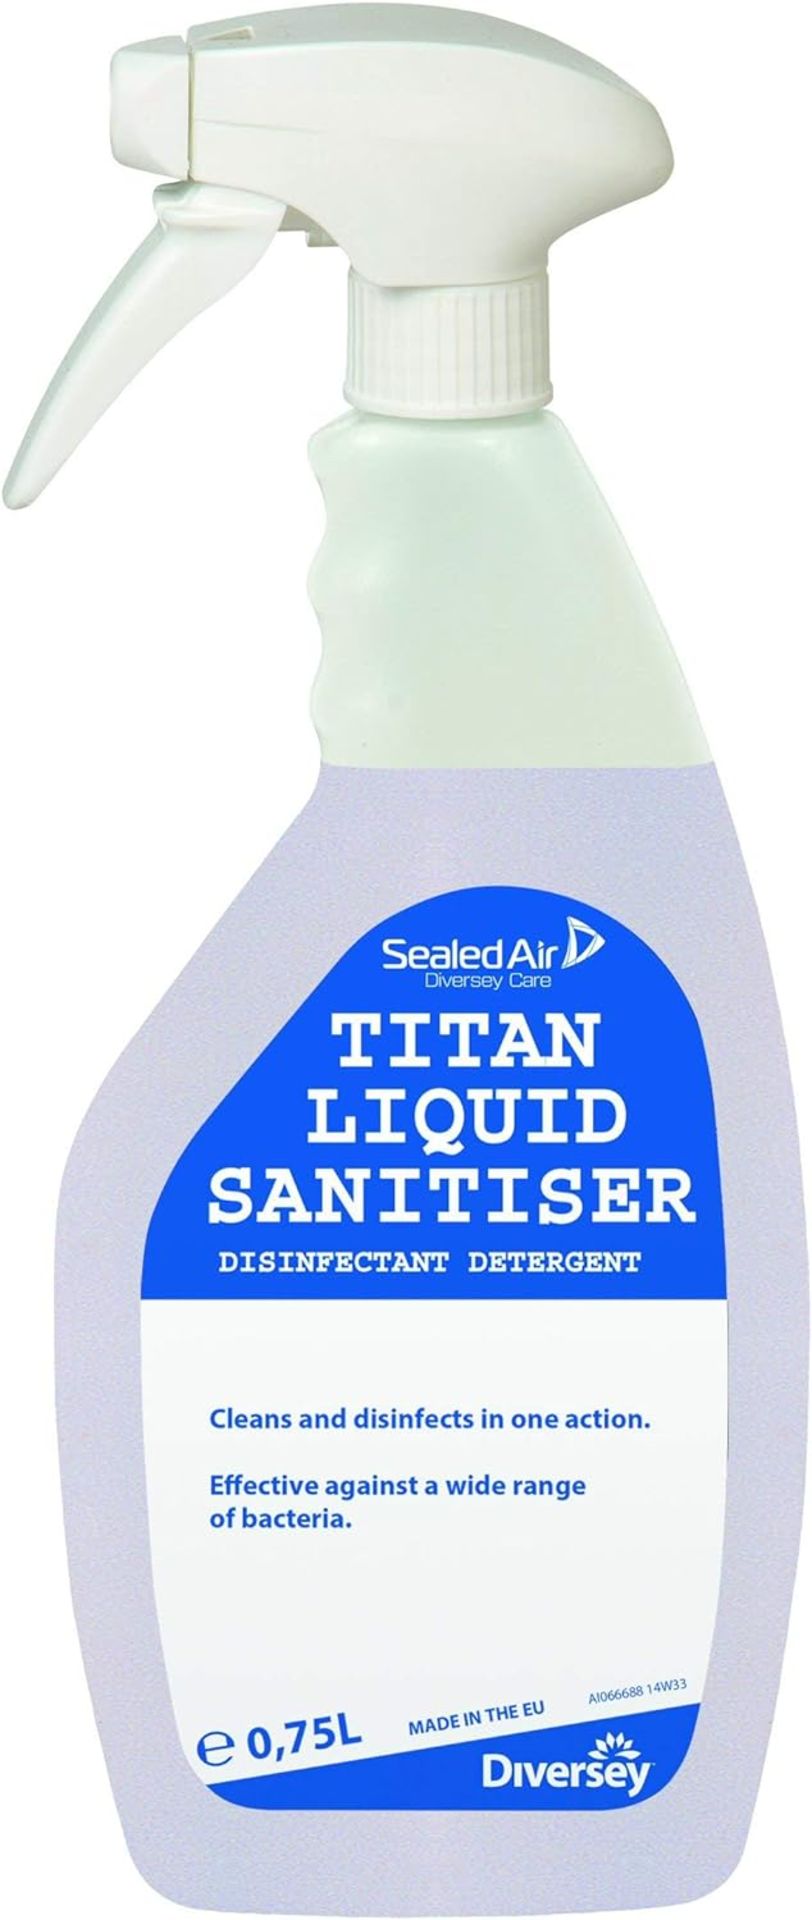 6 x Diversey Titan Liquid Sanitiser Disinfectant Detergent 0.75L Spray